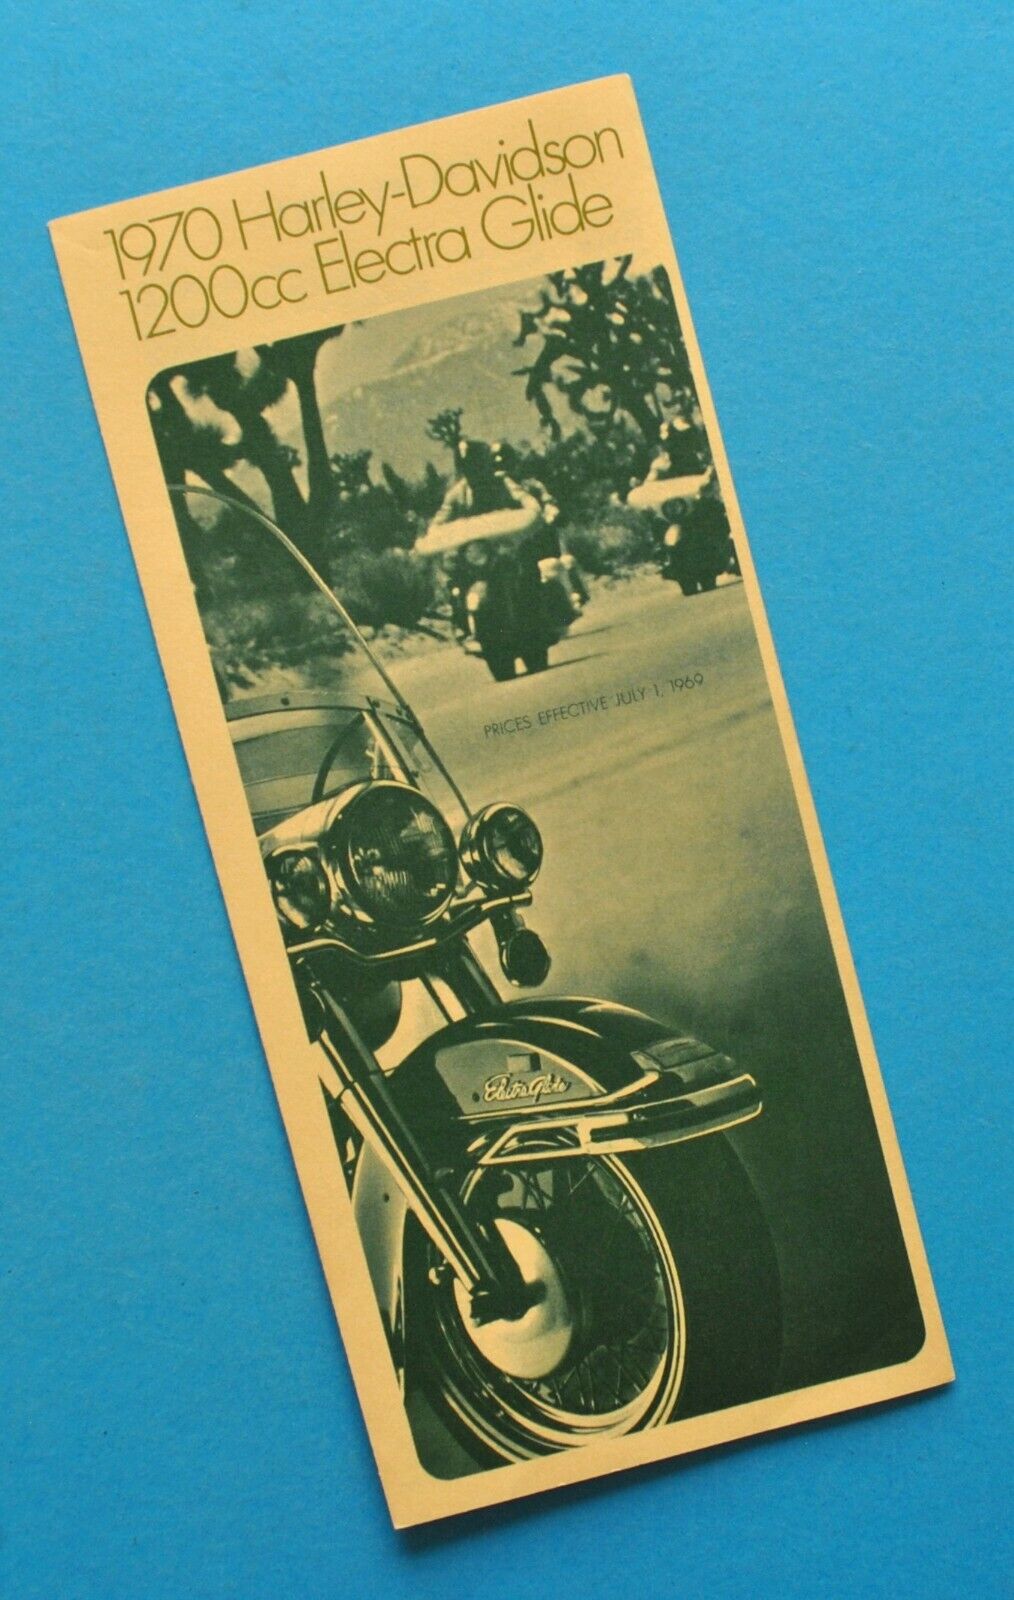 Original 1970 Harley Davidson Electra Glide 1200cc Motorcycle Brochure FLH FLP